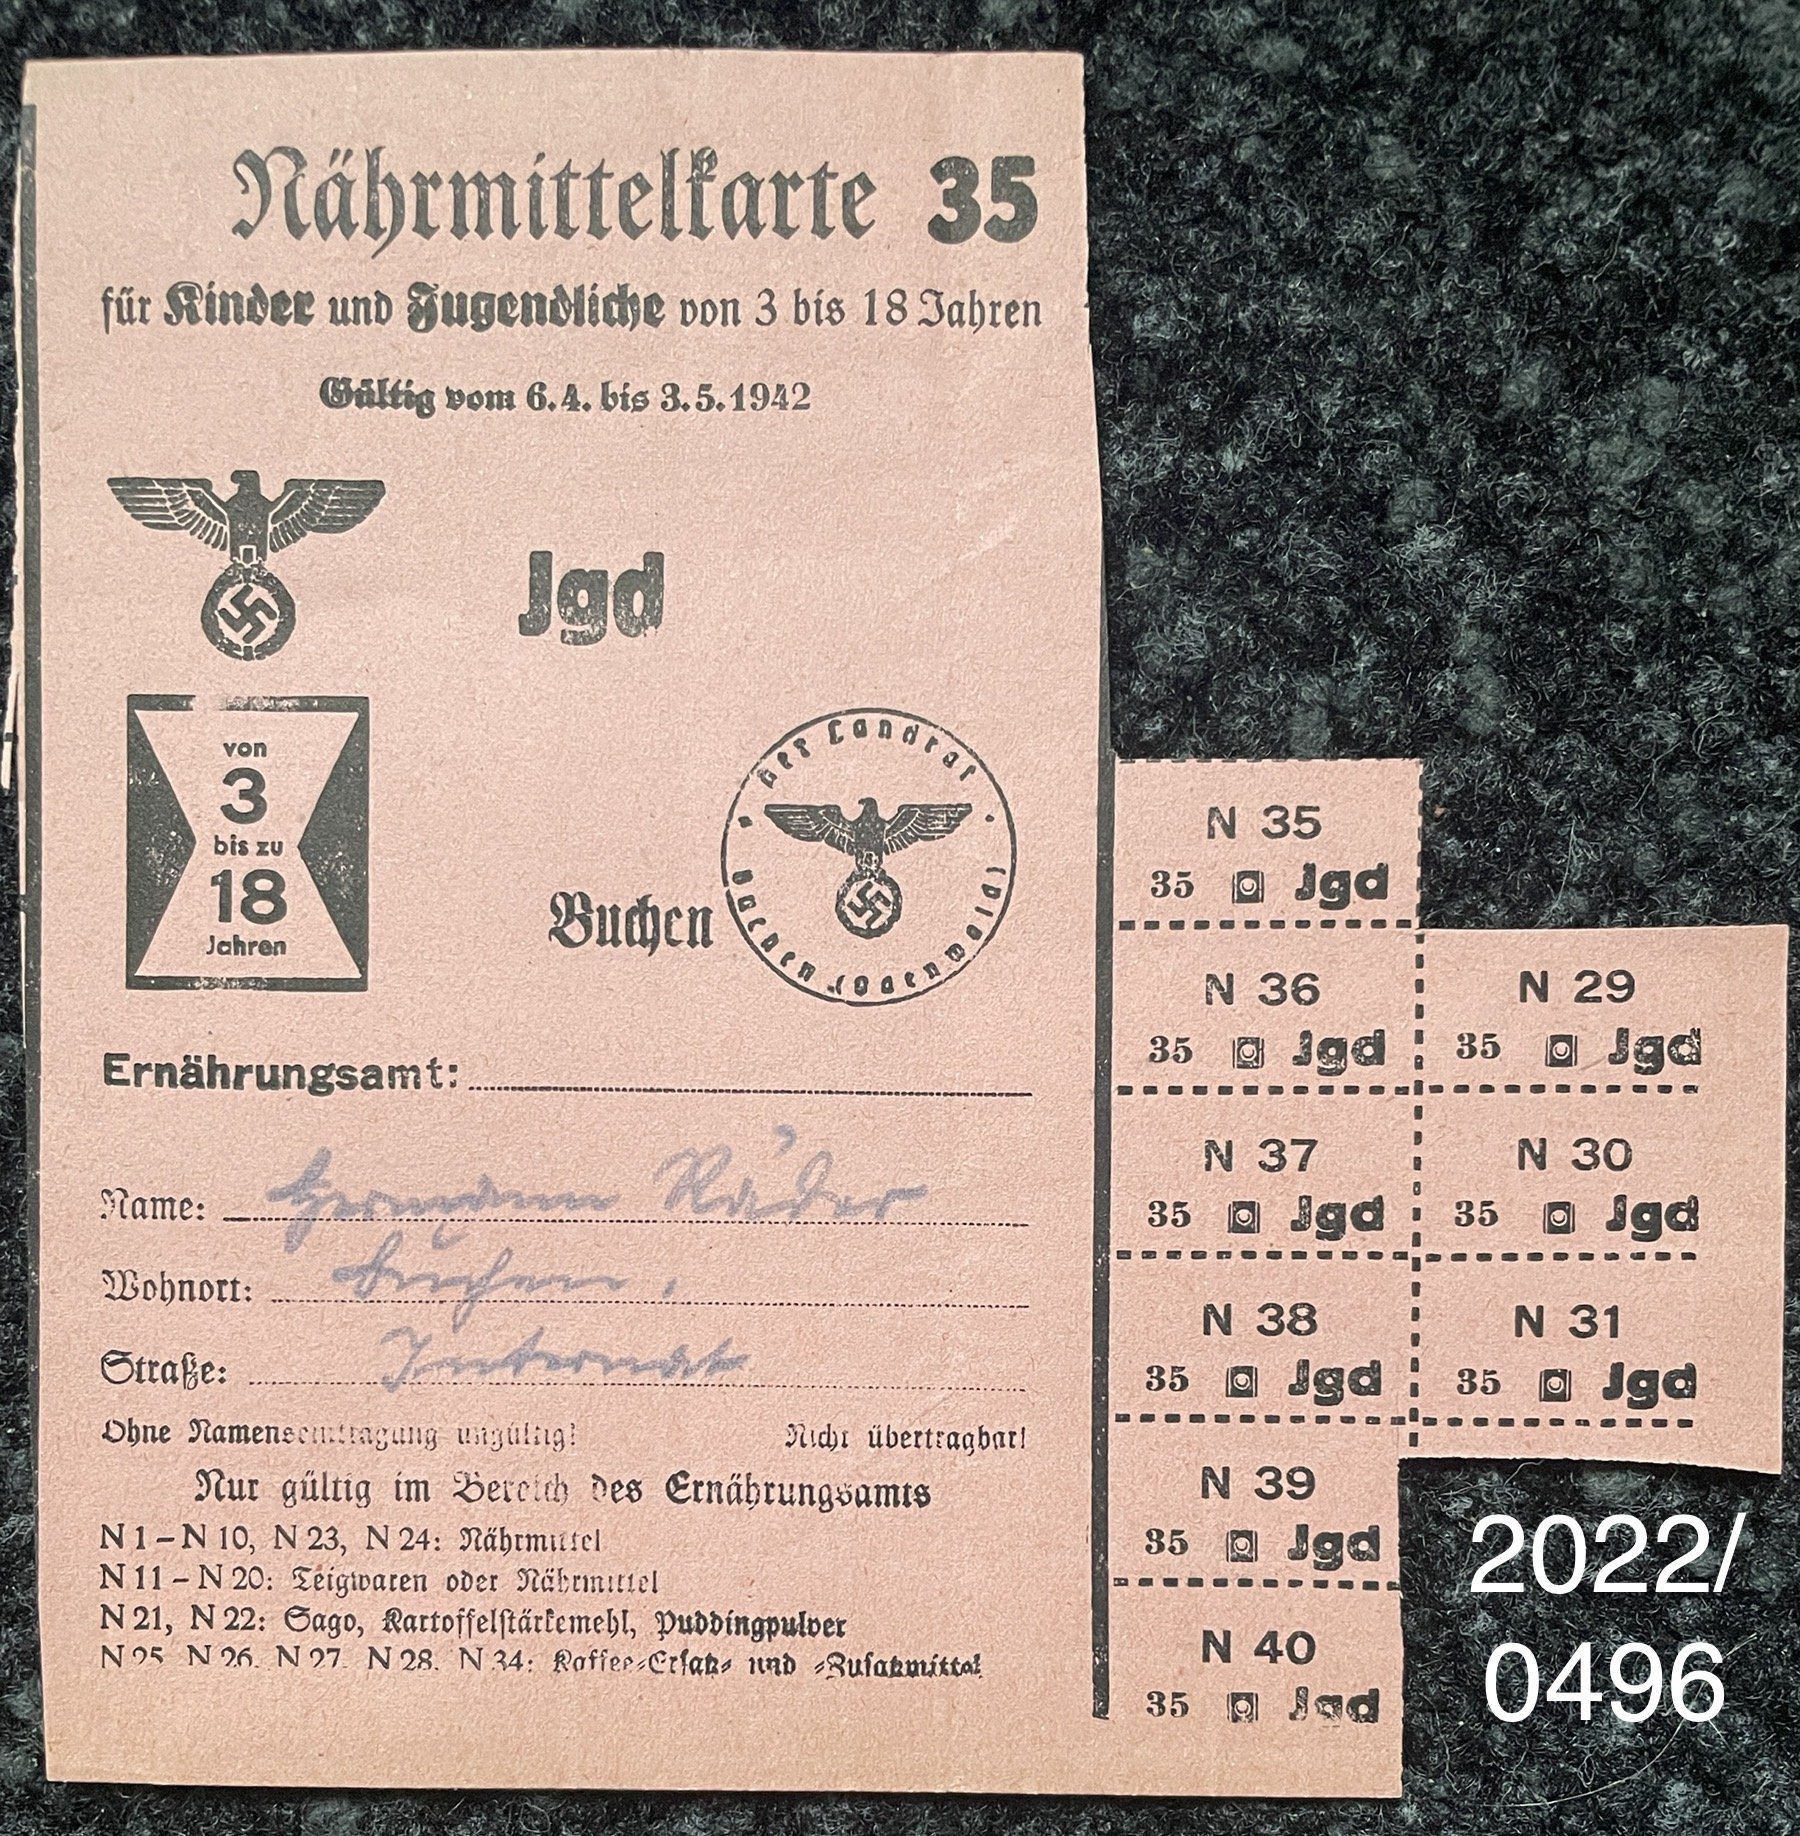 Nährmittelkarte Nr. 35 Jgd 1942 (Stadtmuseum Bad Dürkheim im Kulturzentrum Haus Catoir CC BY-NC-SA)